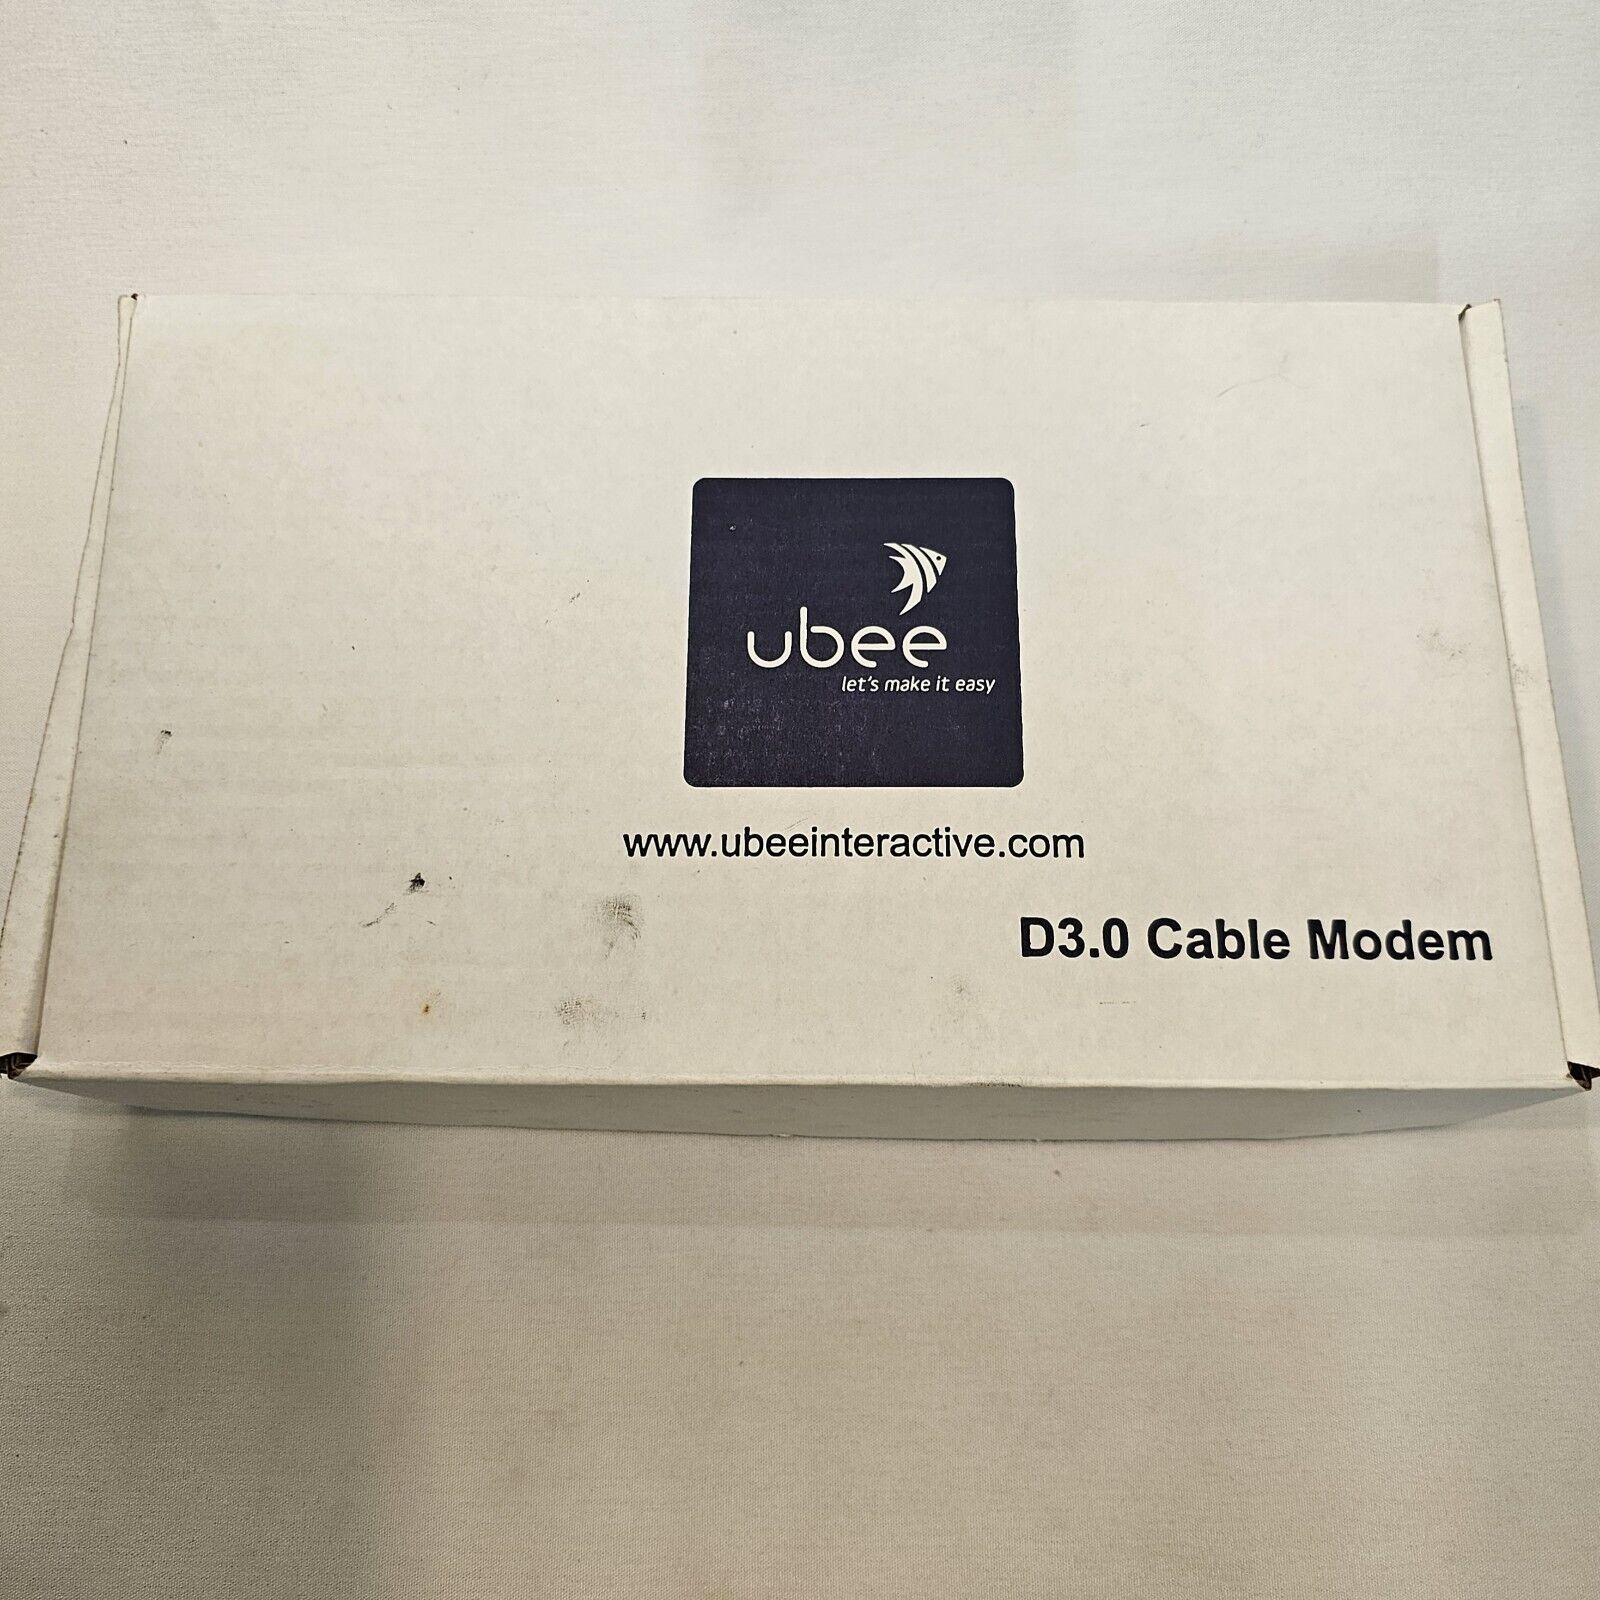 Ubee D3.0 Cable Modem DC030910 Docsis NIB